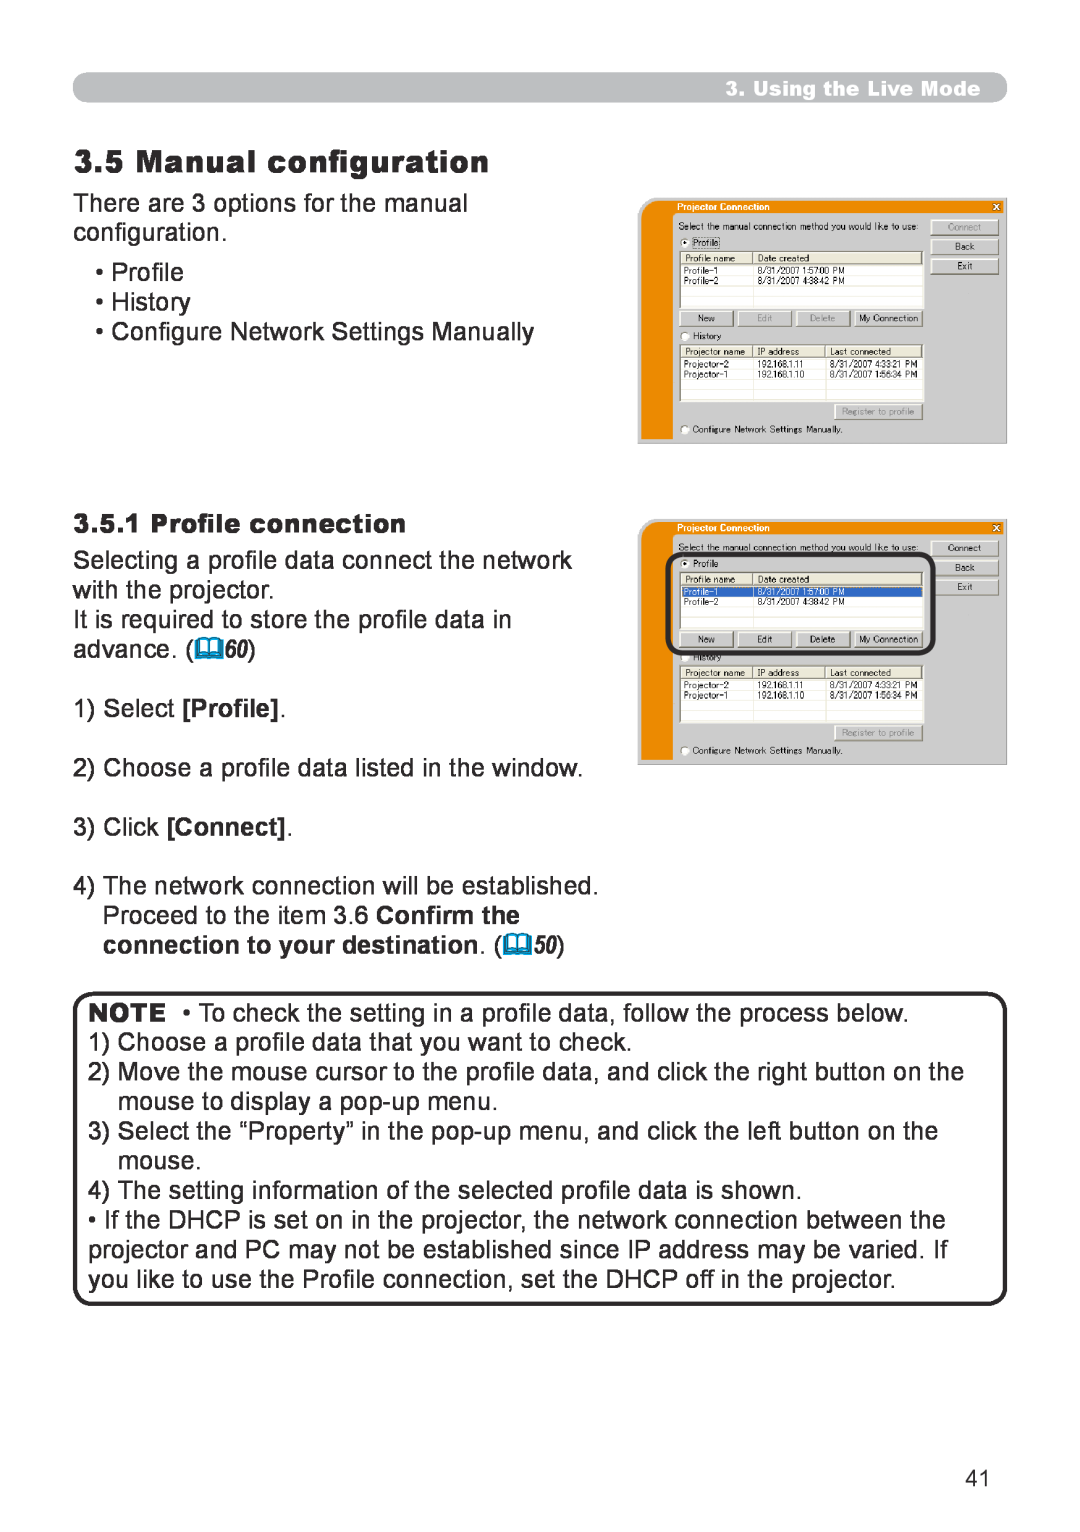 Hitachi CP-X267 user manual Manual configuration, Profile connection, 1Select Profile, 3Click Connect 